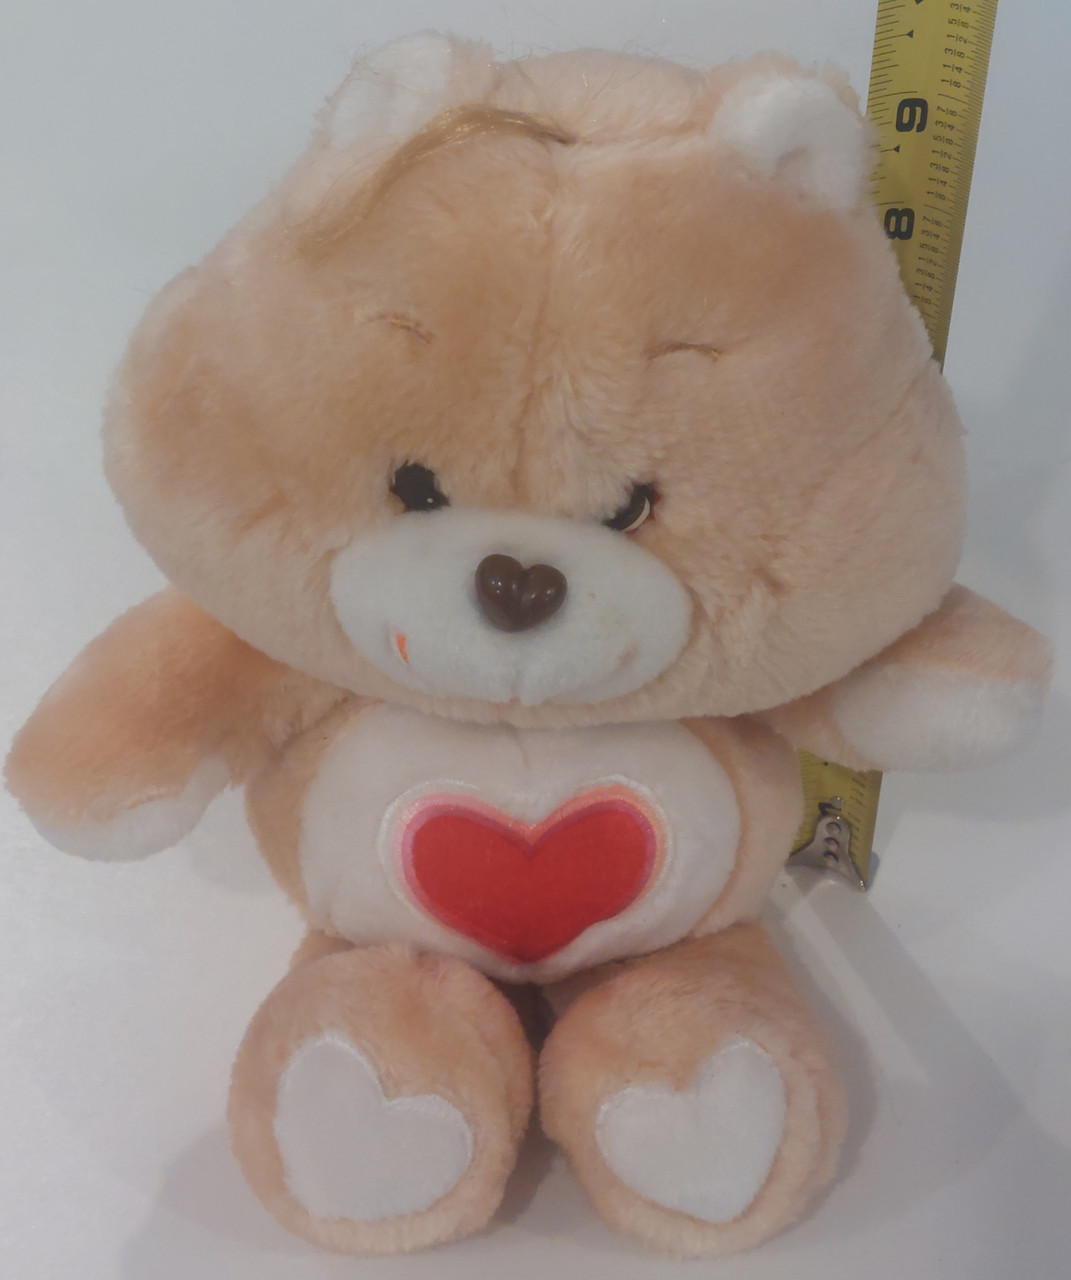 Care Bears Vintage 1983 Tender Heart Plush 13 Stuffed Bear by Kenner